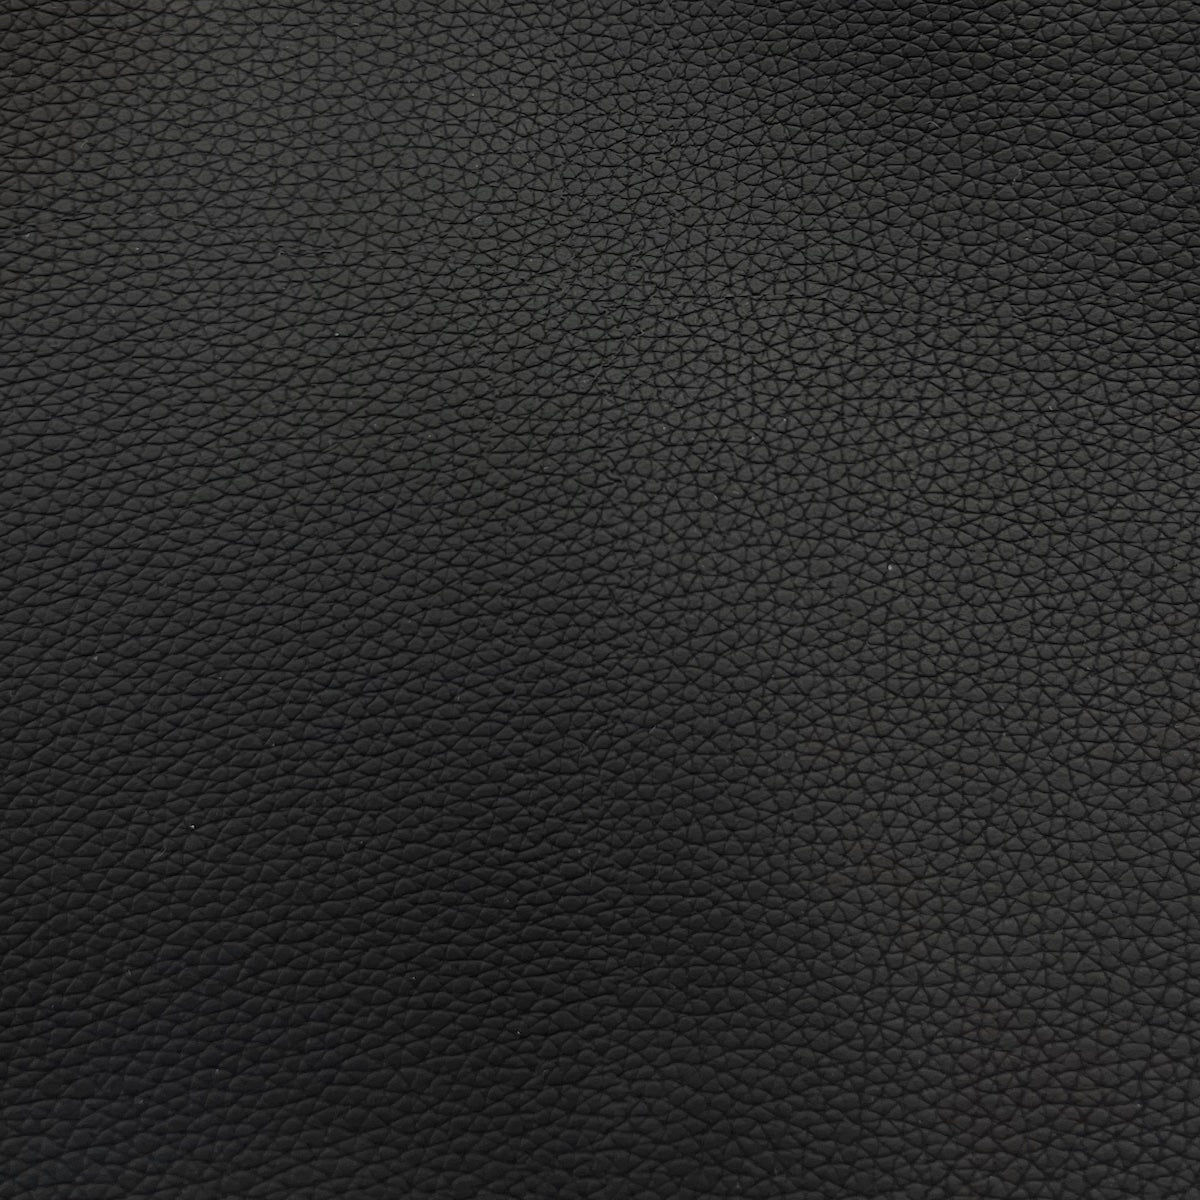 Black foam texture stock photo. Image of element, fabric - 112065392